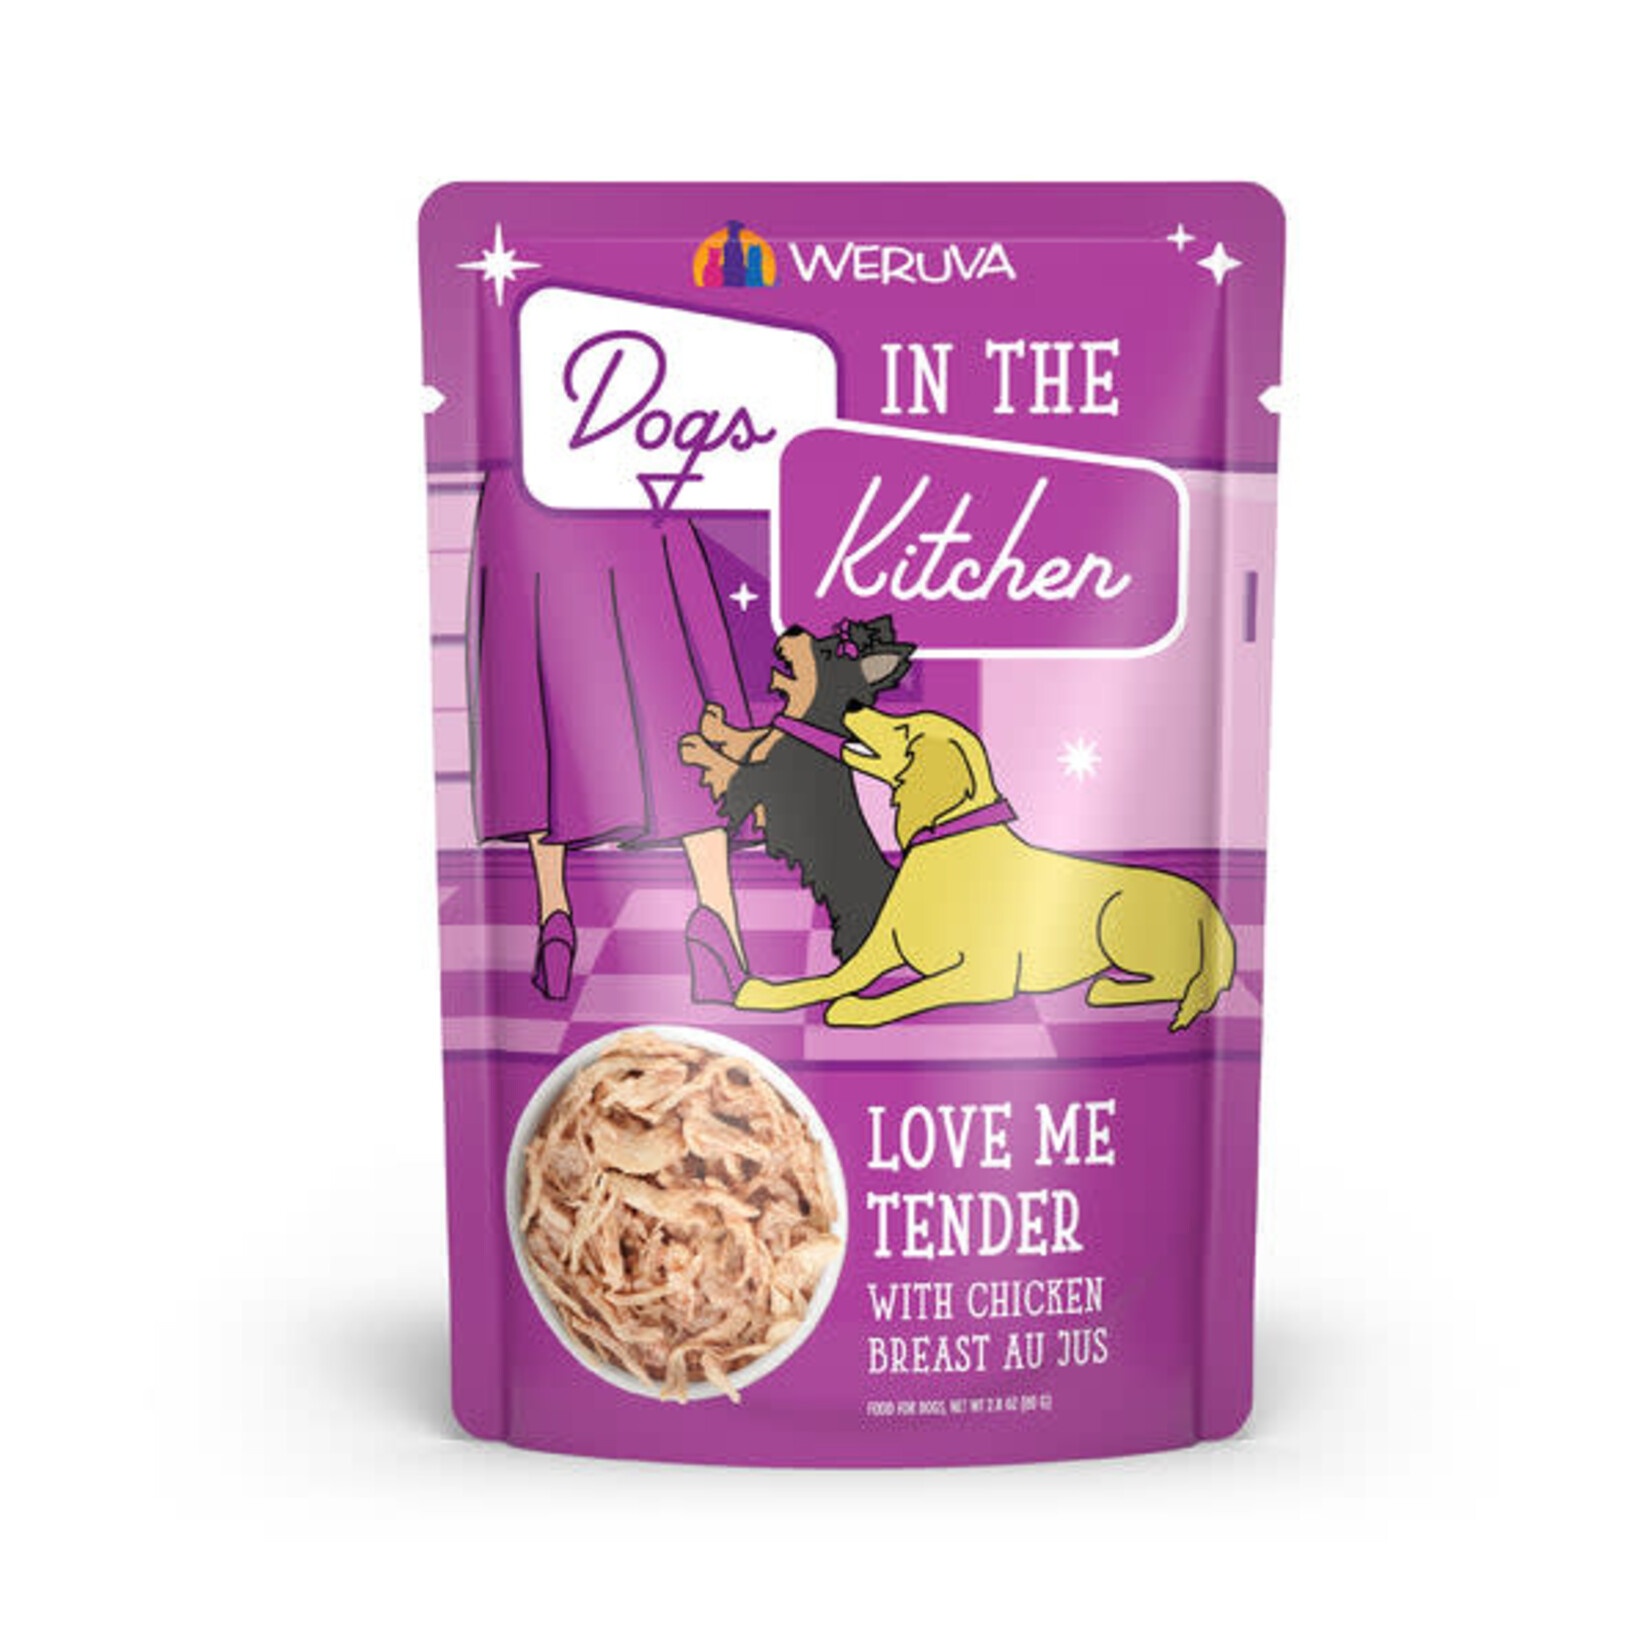 Weruva Dogs in the Kitchen - Love Me Tender with Chicken Breast Au Jus